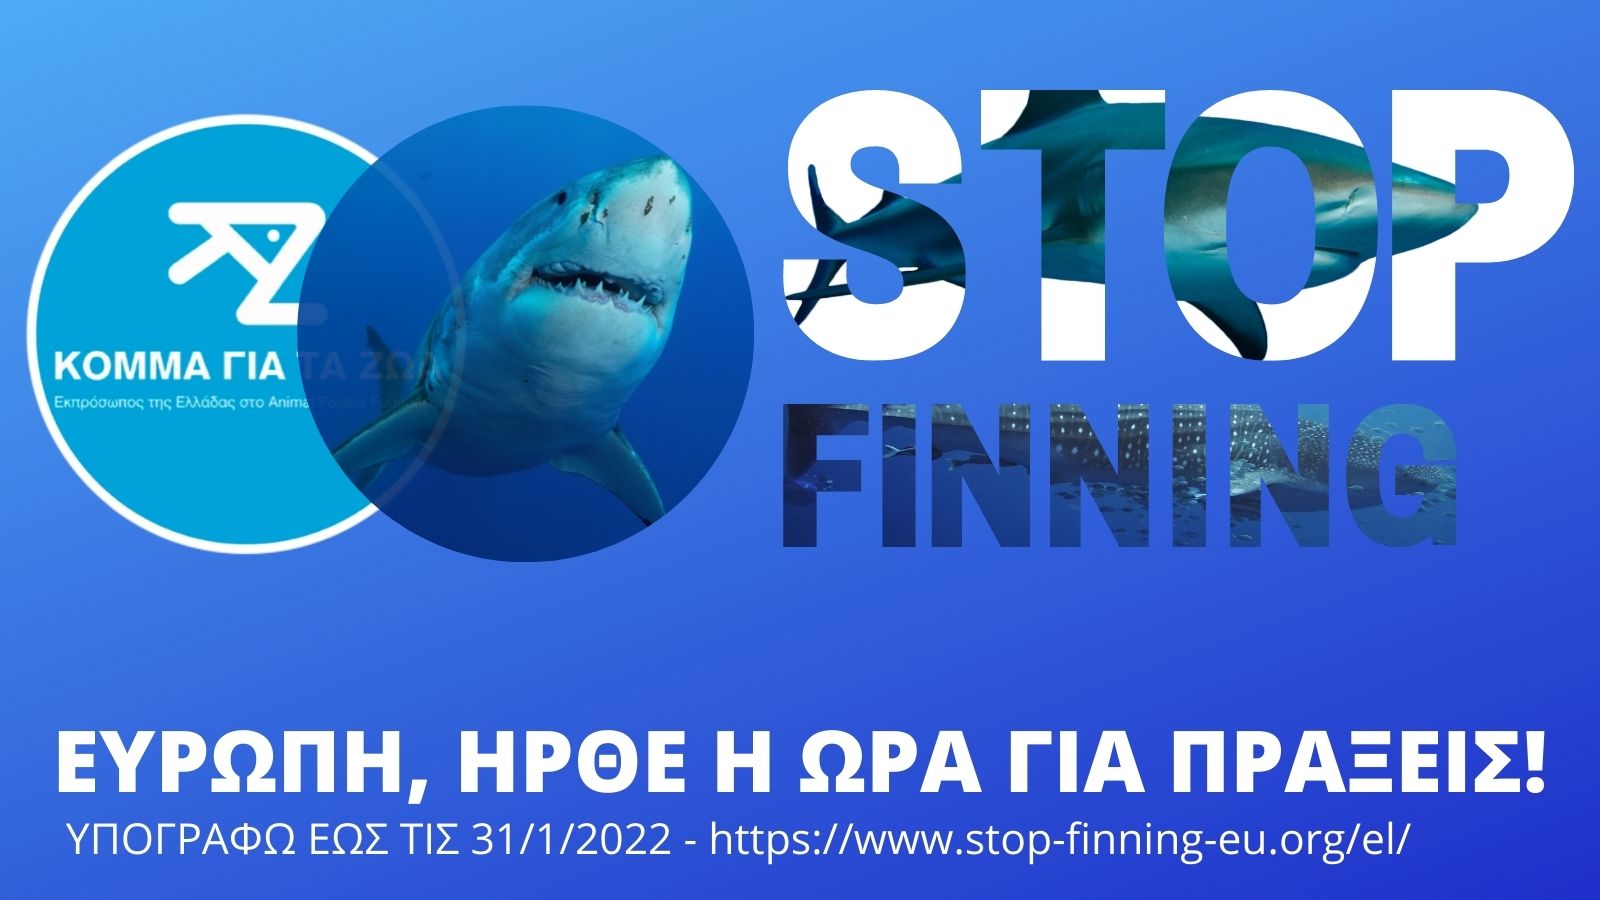 H πανευρωπαϊκή πρωτοβουλία για την απαγόρευση του εμπορίου πτερύγιων καρχαρία αποκτά δυναμική